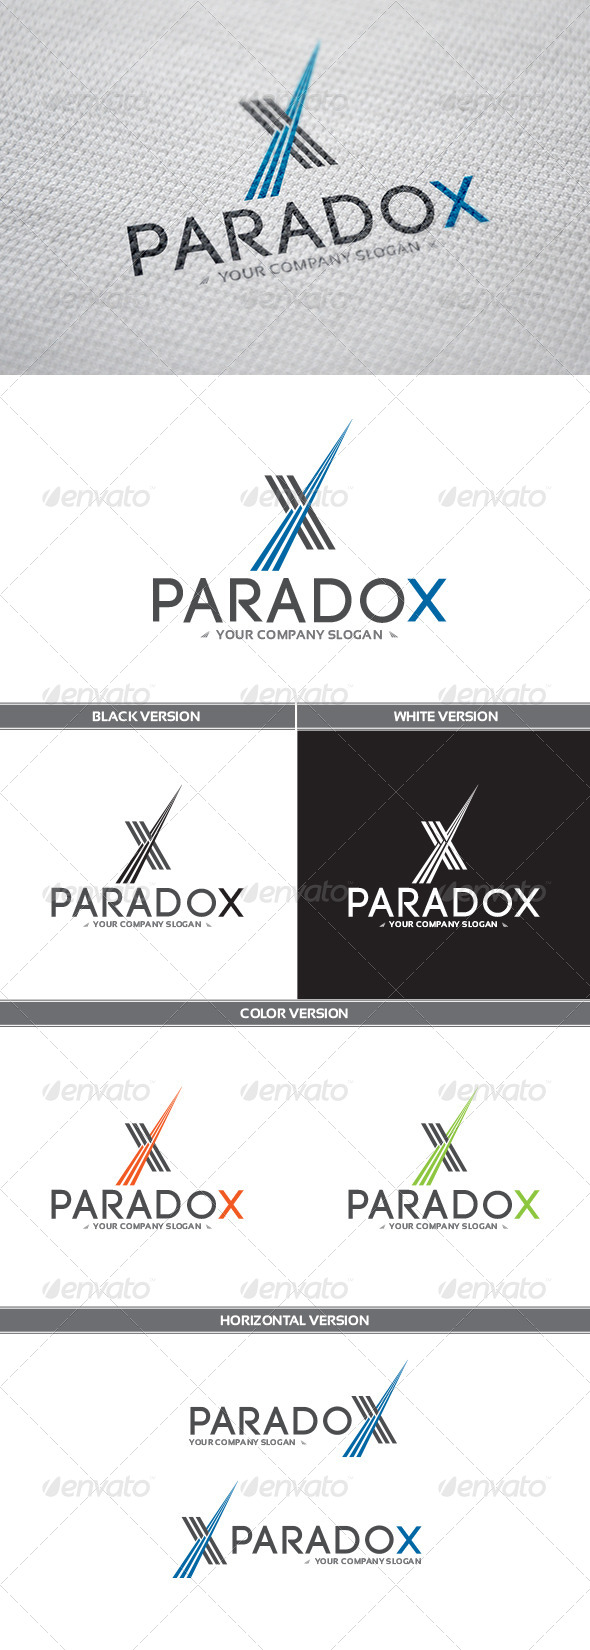 ParadoX Logo